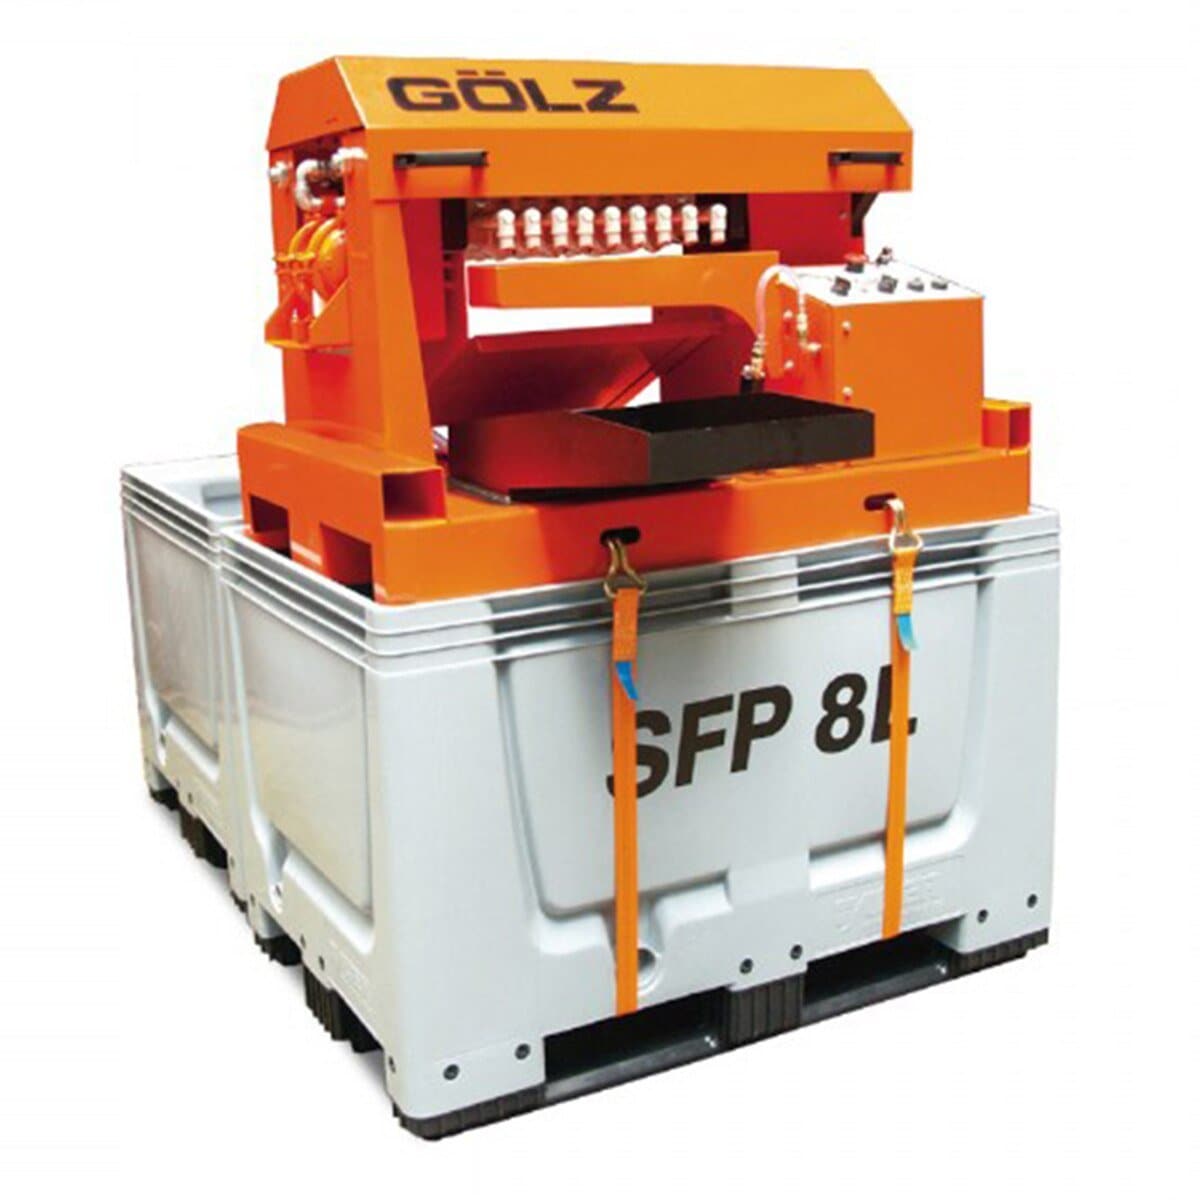 Golz Slurry Fox SFP 8L - Golz